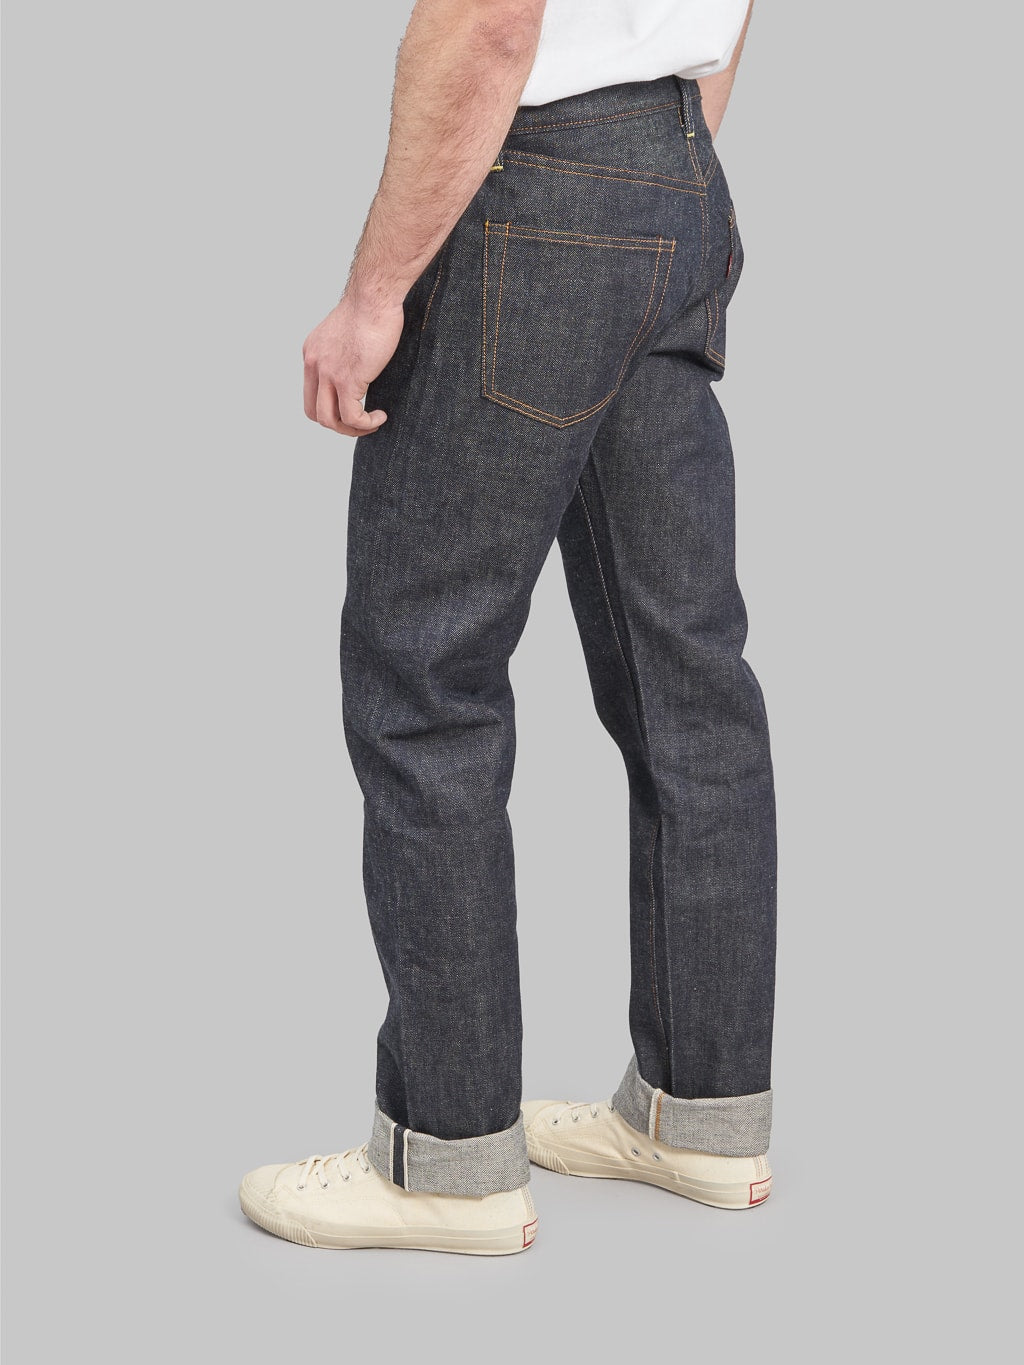 Denime By Warehouse & Co. "Lot. 224" 66Model 14.5oz Regular Straight Jeans